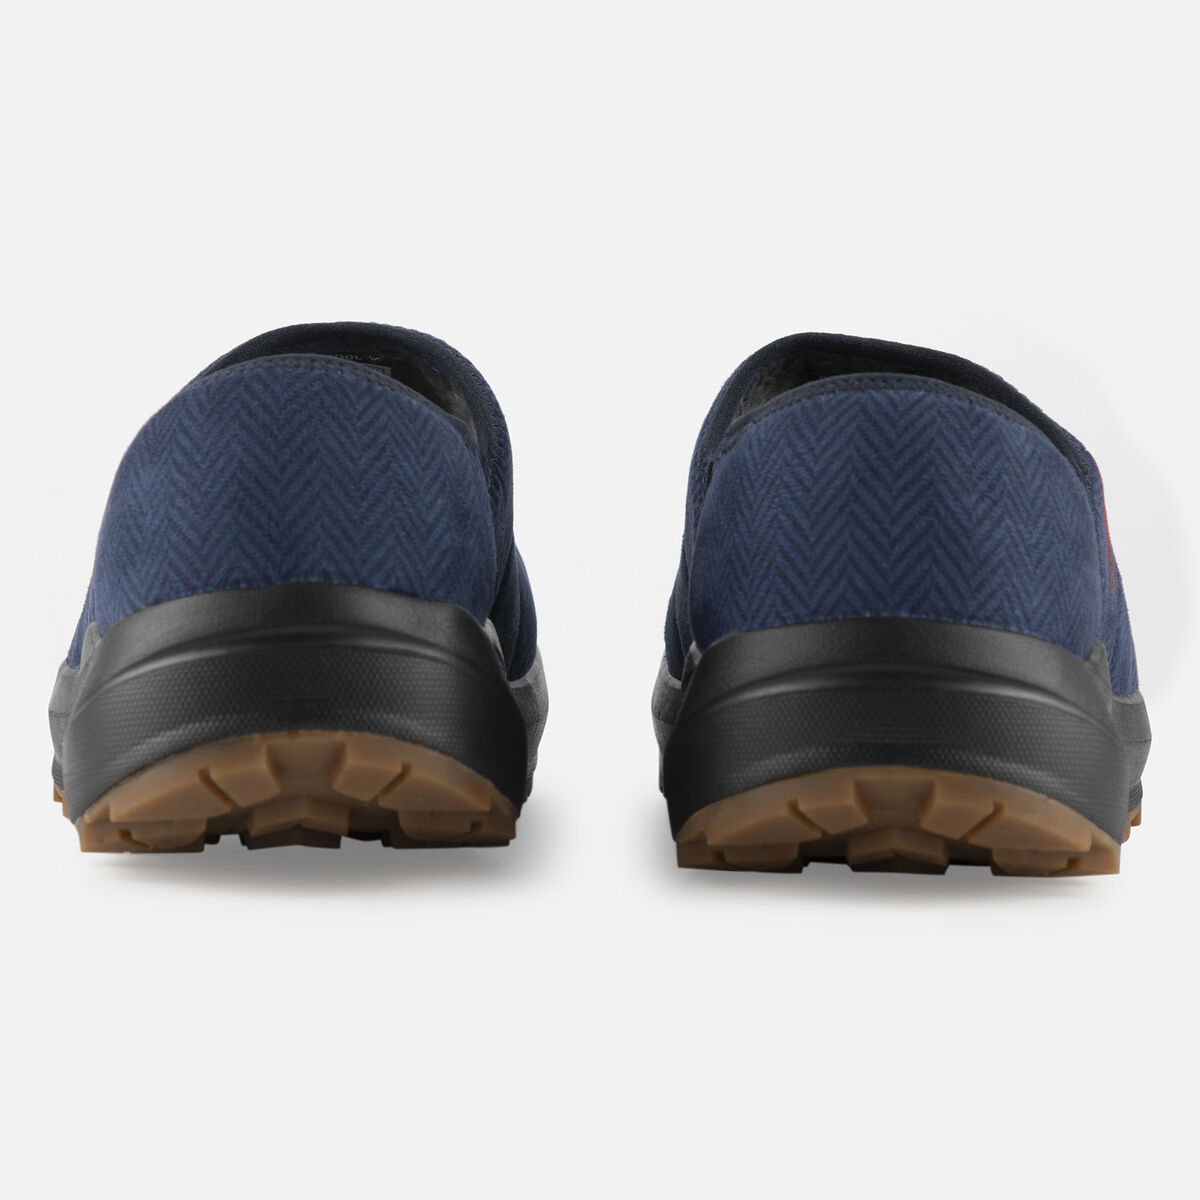 Pantofole invernali Unisex Chalet blu navy scuro